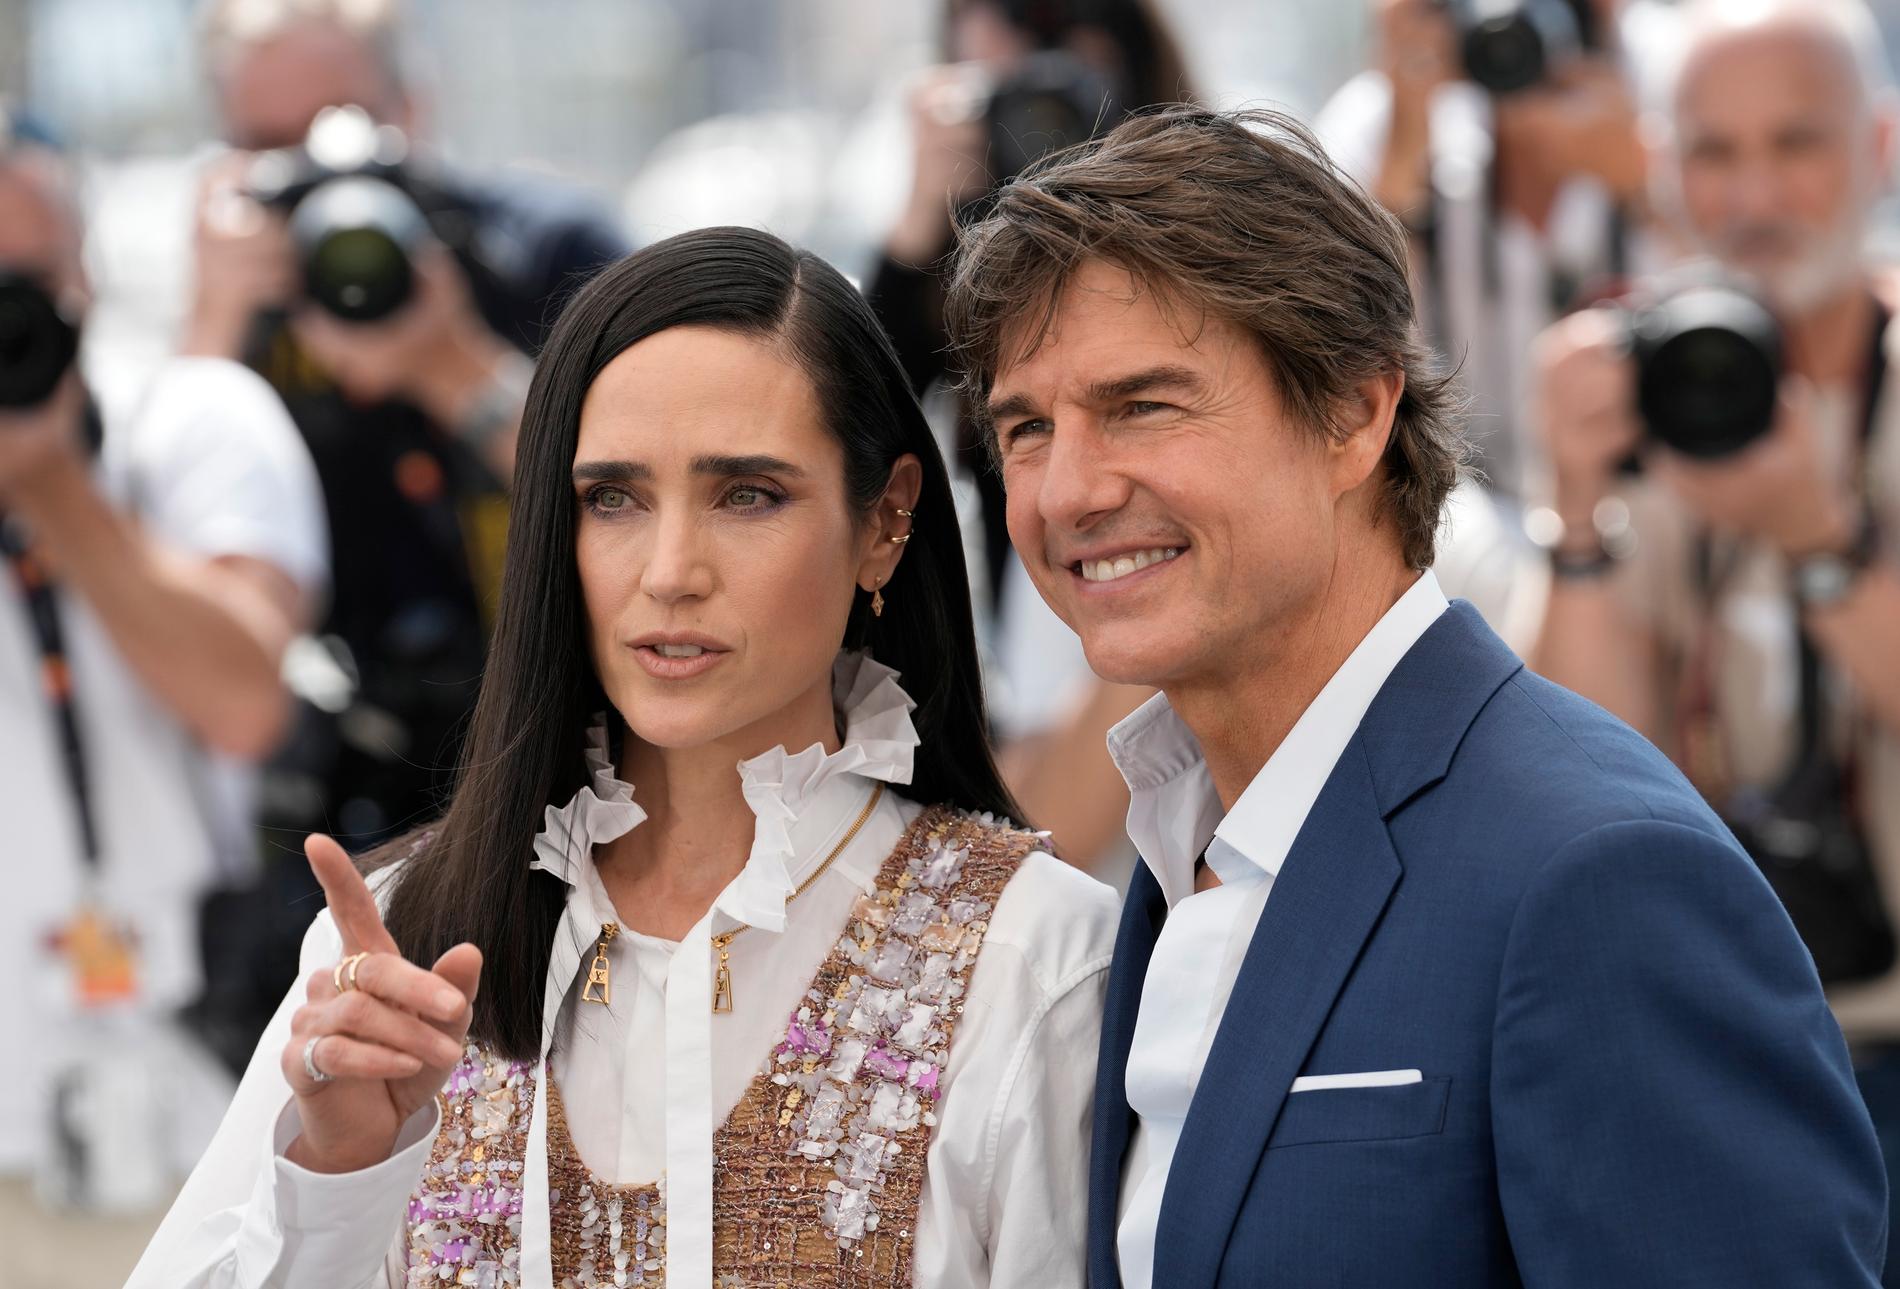 Jennifer Connelly och Tom Cruise under Cannesfestivalen i Frankrike där Cruise tilldelades hedersguldpalmen.